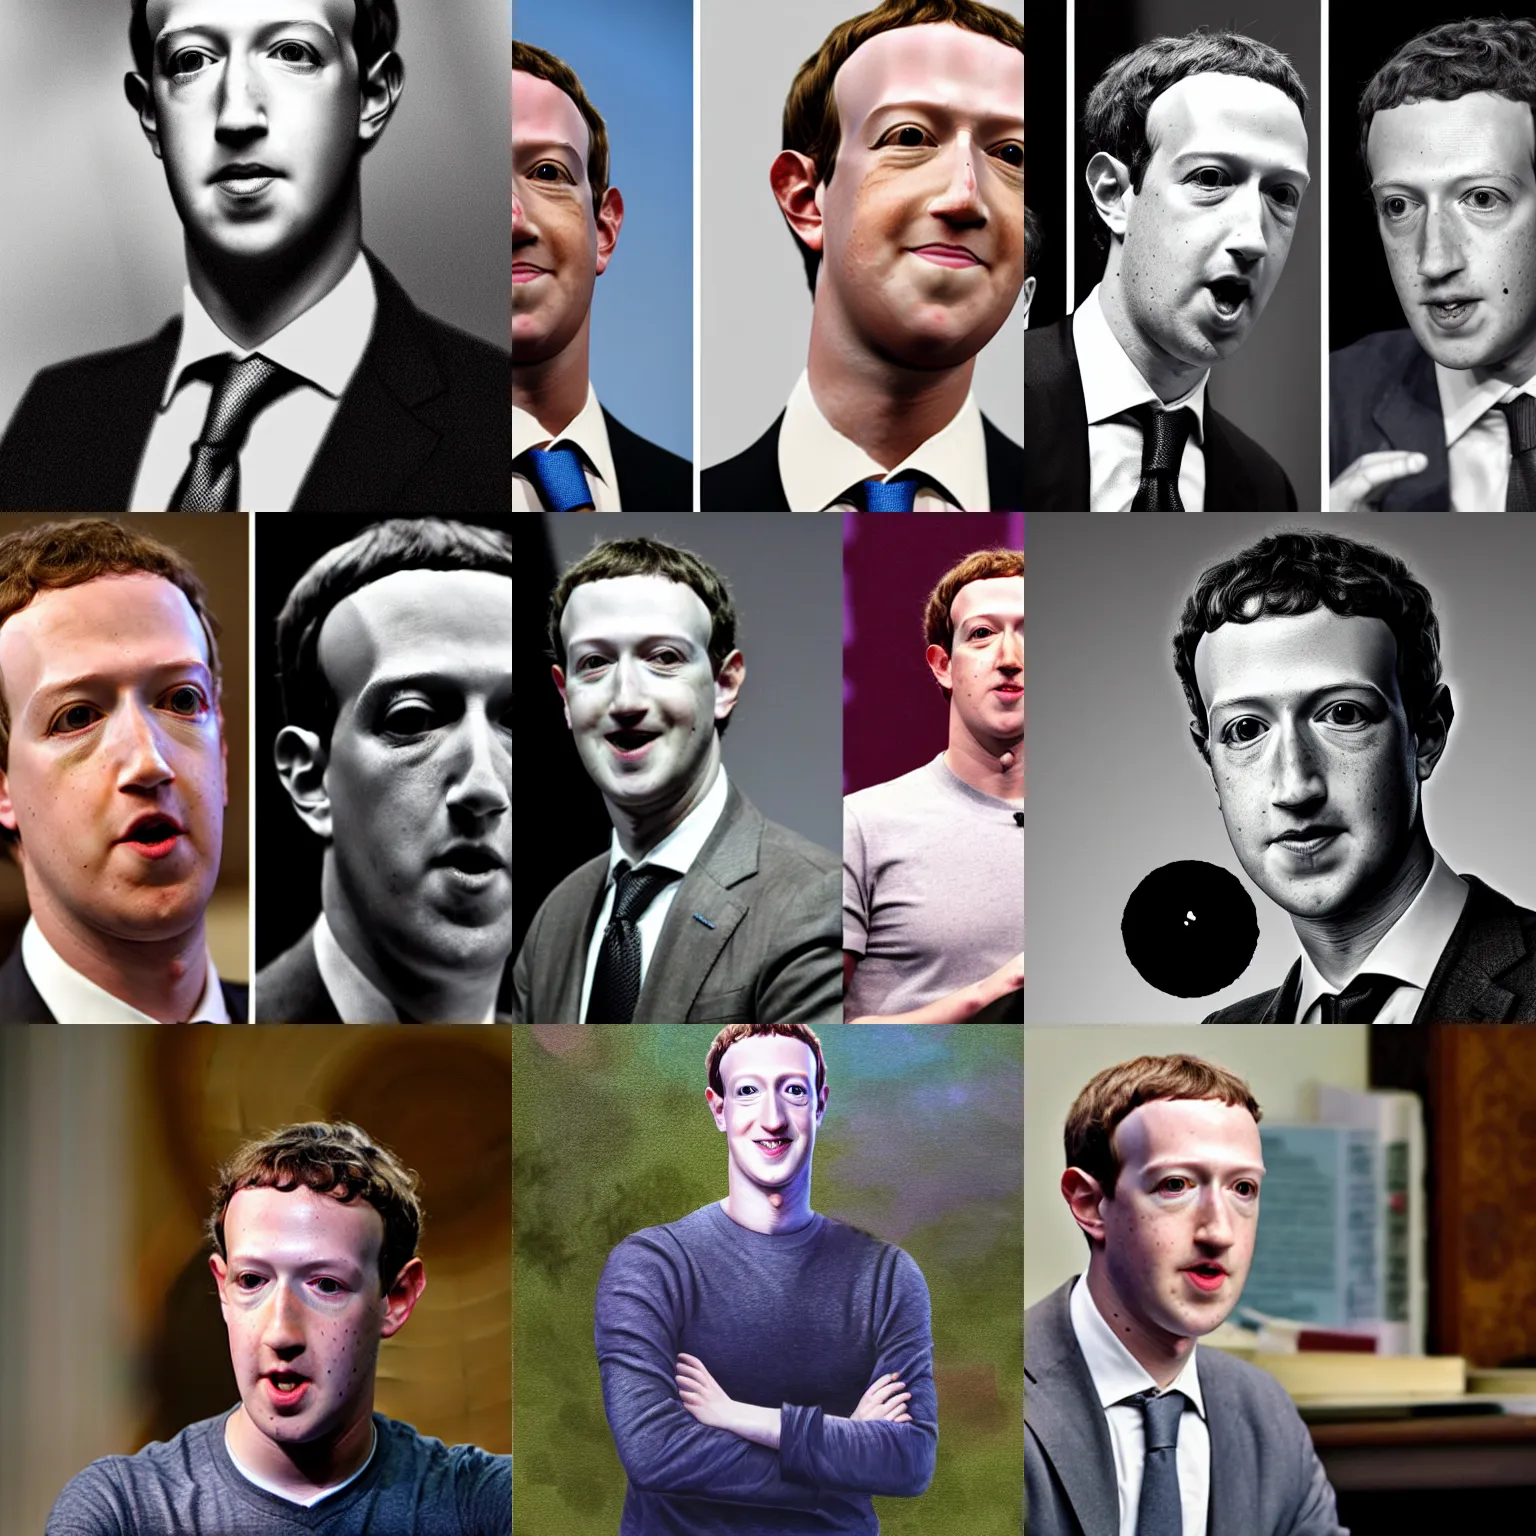 Prompt: Mark Zuckerberg as Howard Phillips Lovecraft